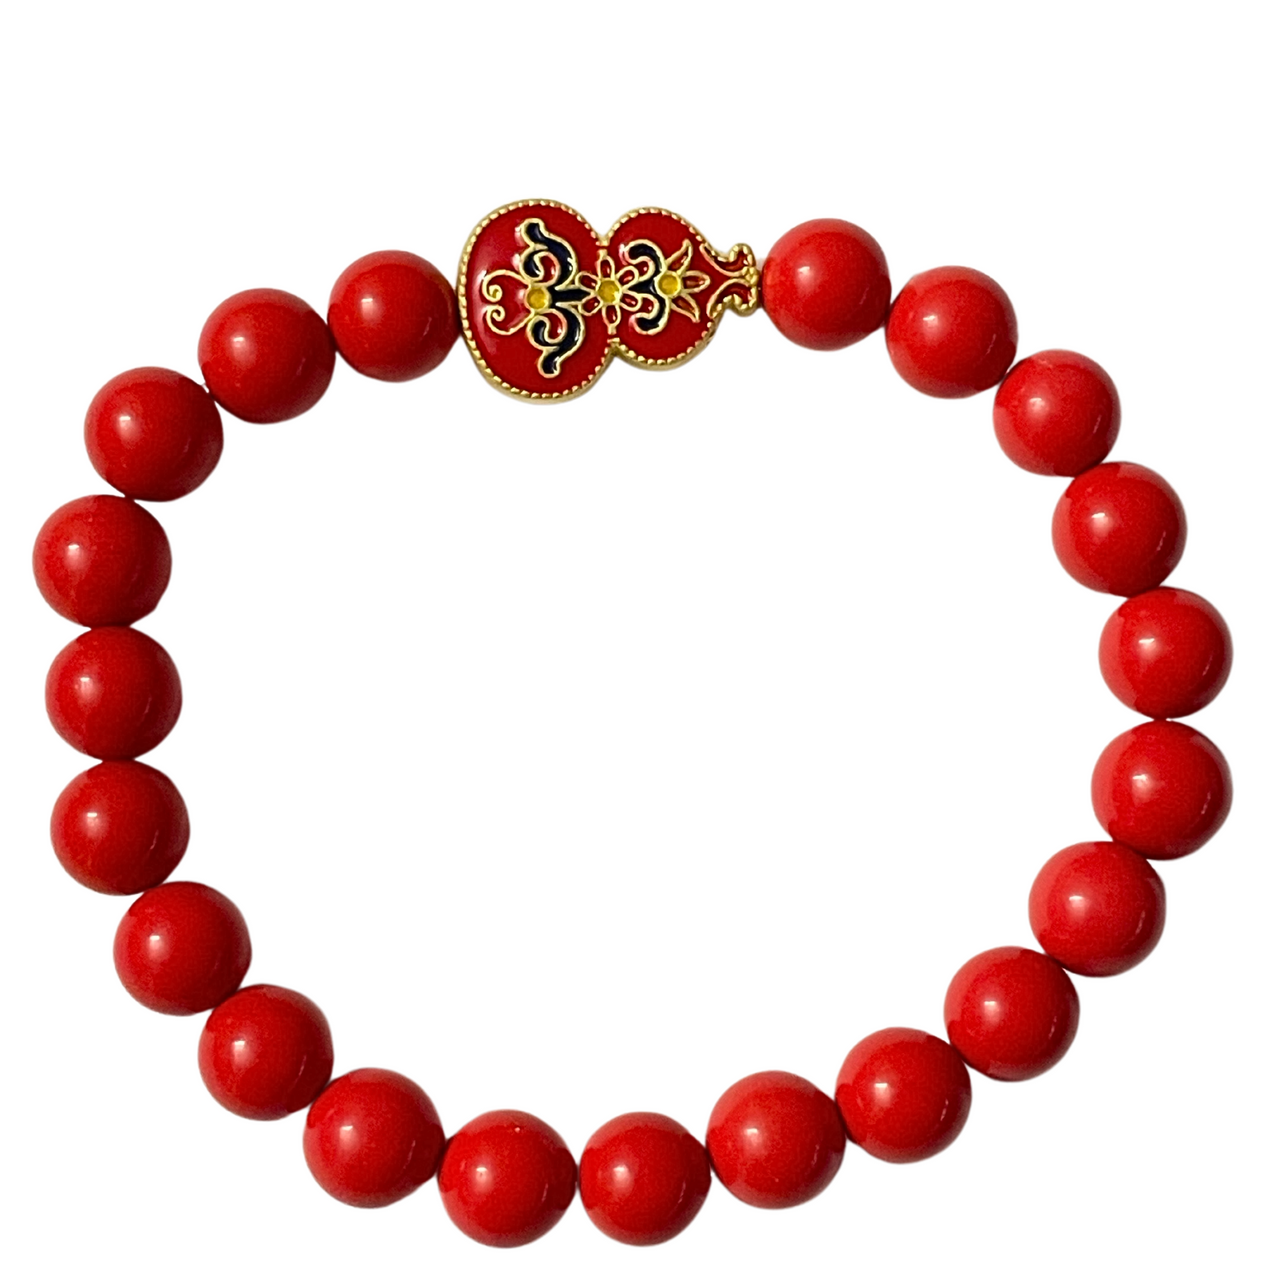 Feng shui coin bracelet - A Spiritual Ninja